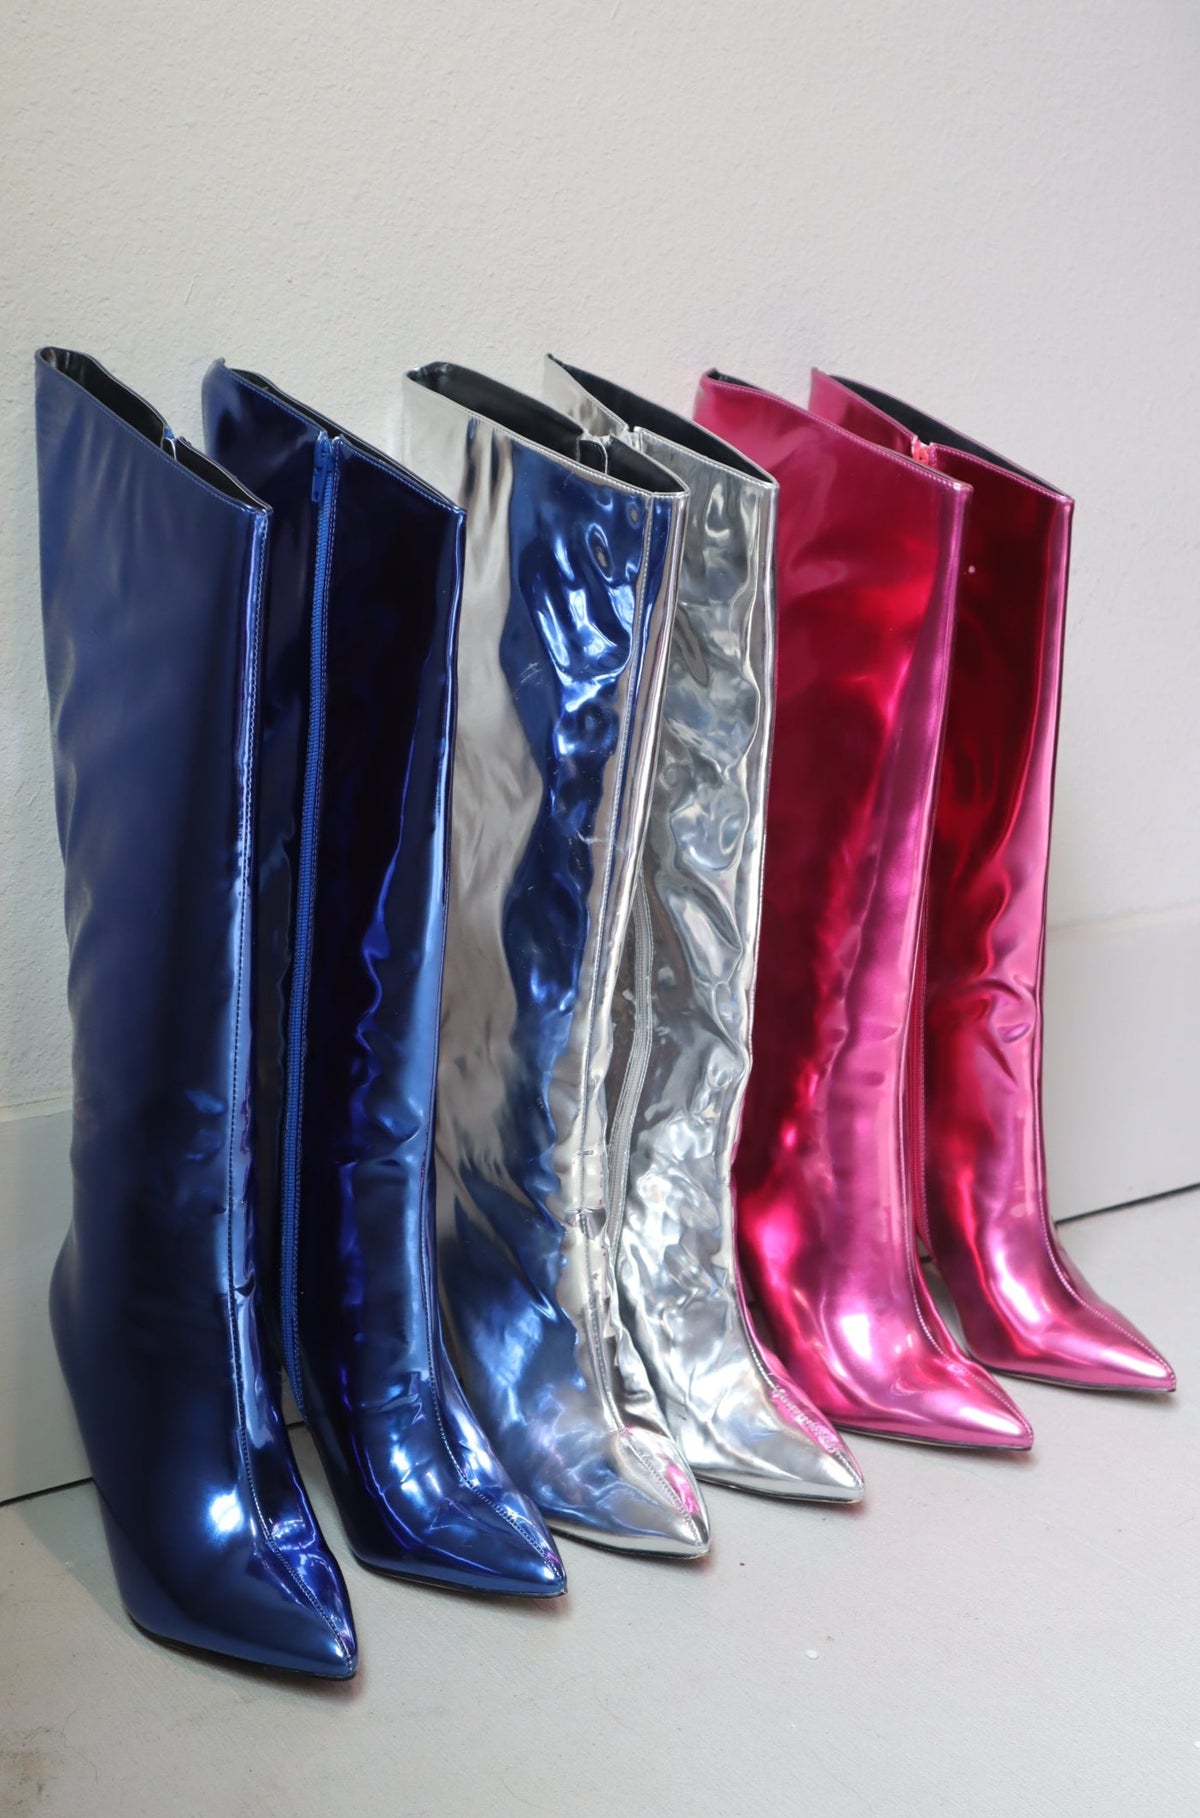 Metallic Knee High Boots (Multiple Colors)